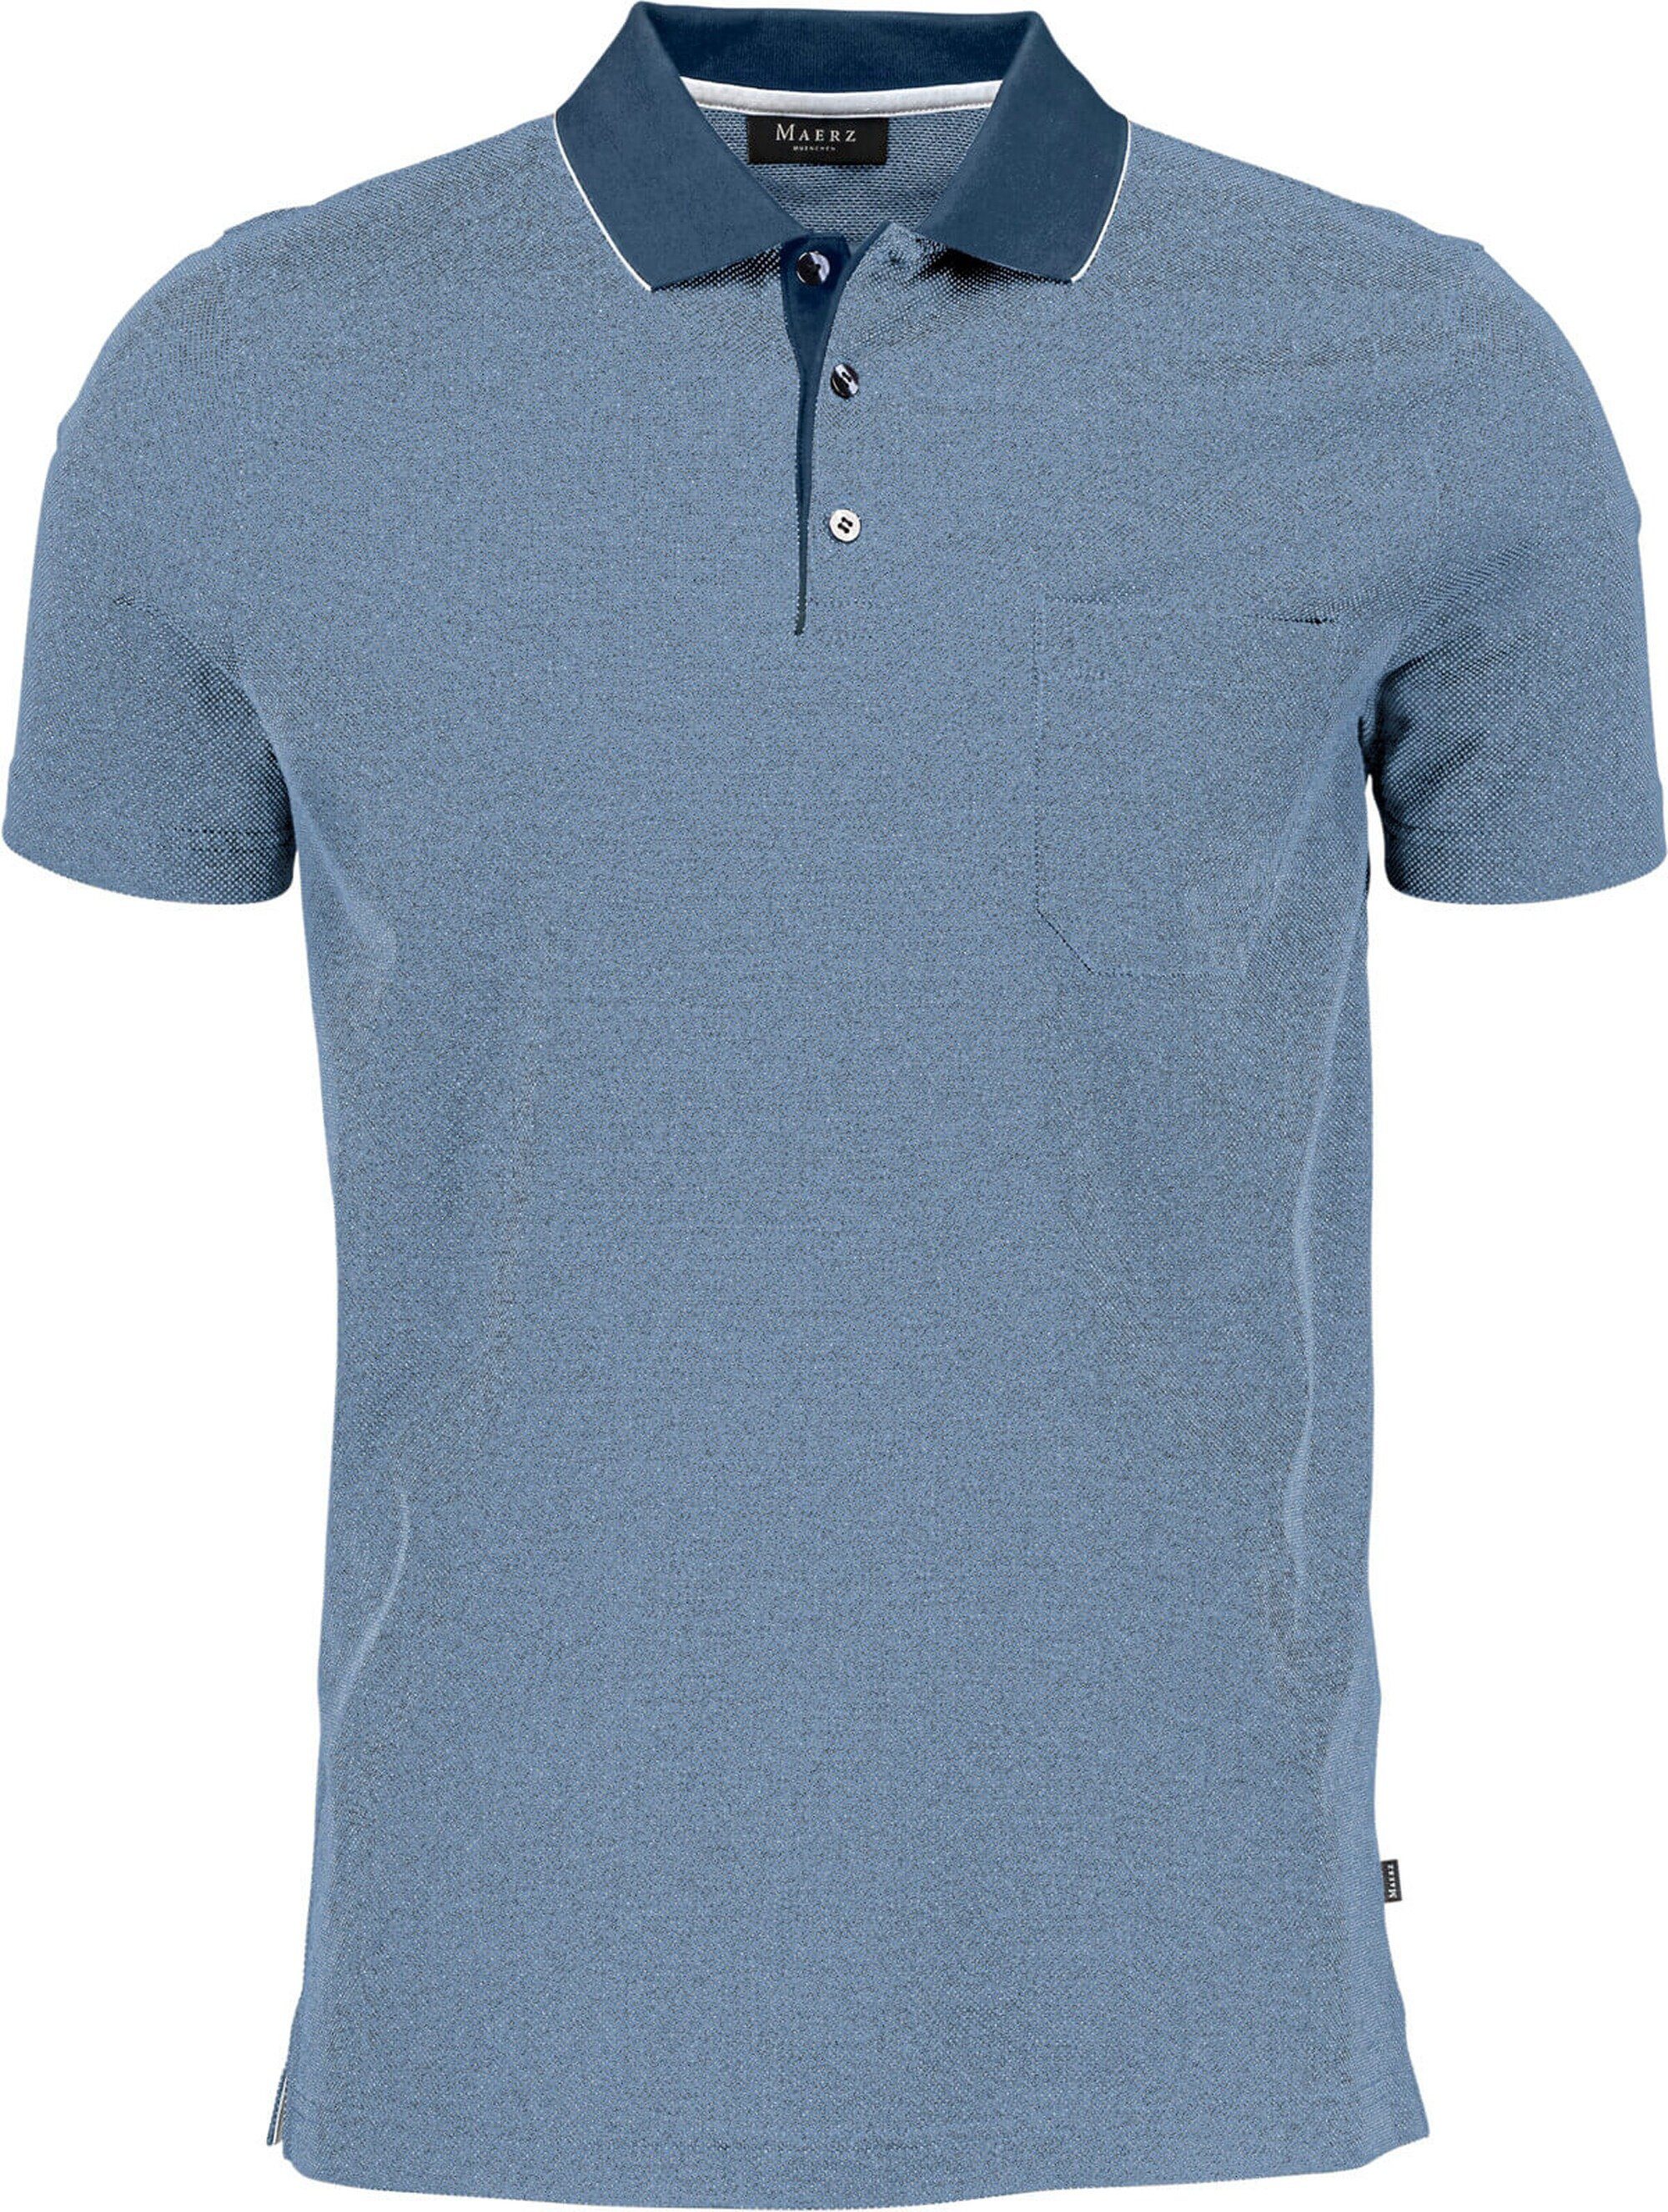 aus Baumwolle MAERZ MAERZ Poloshirt hellblau merceresierter Polo-Shirt Muenchen